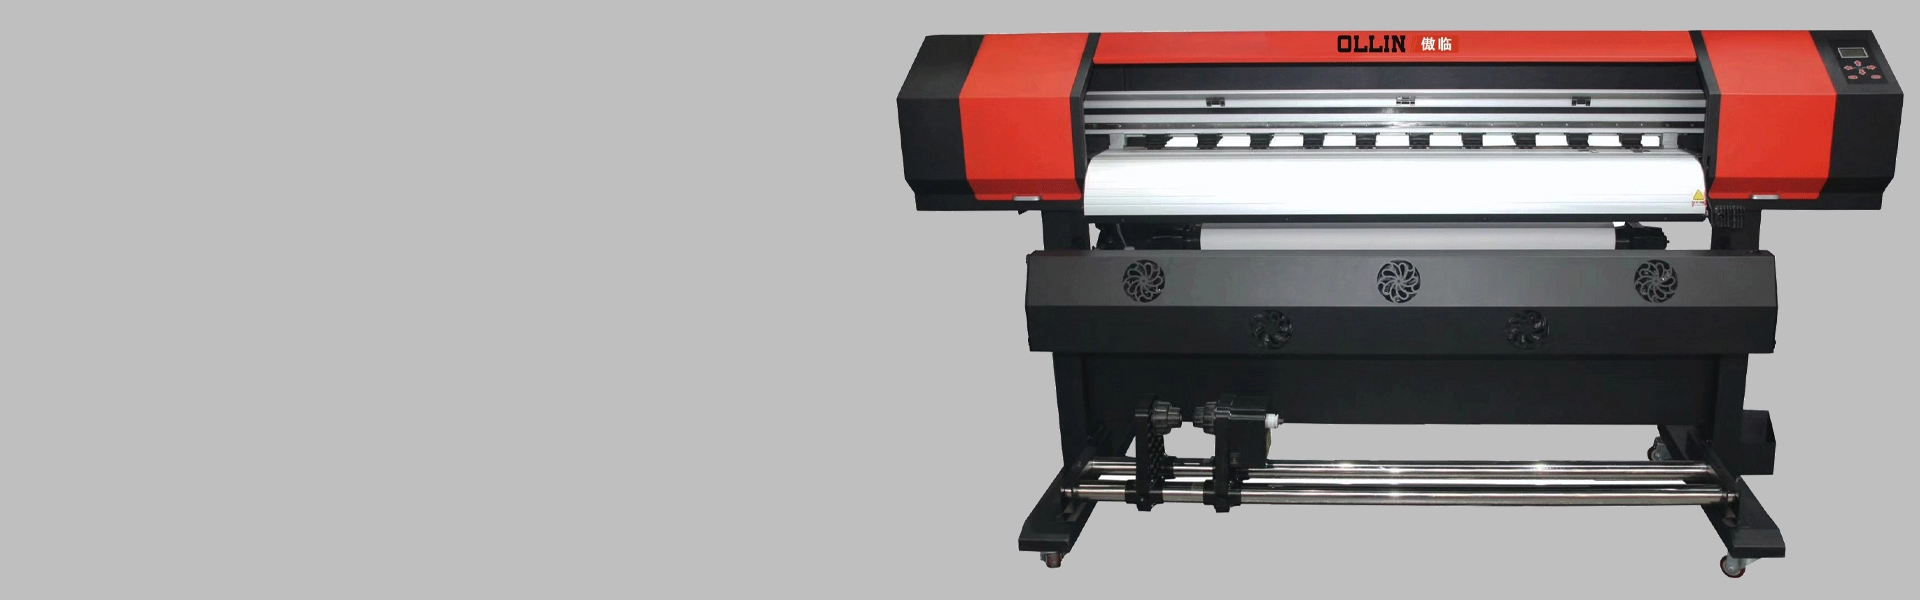 1.2m Sublimation Printer